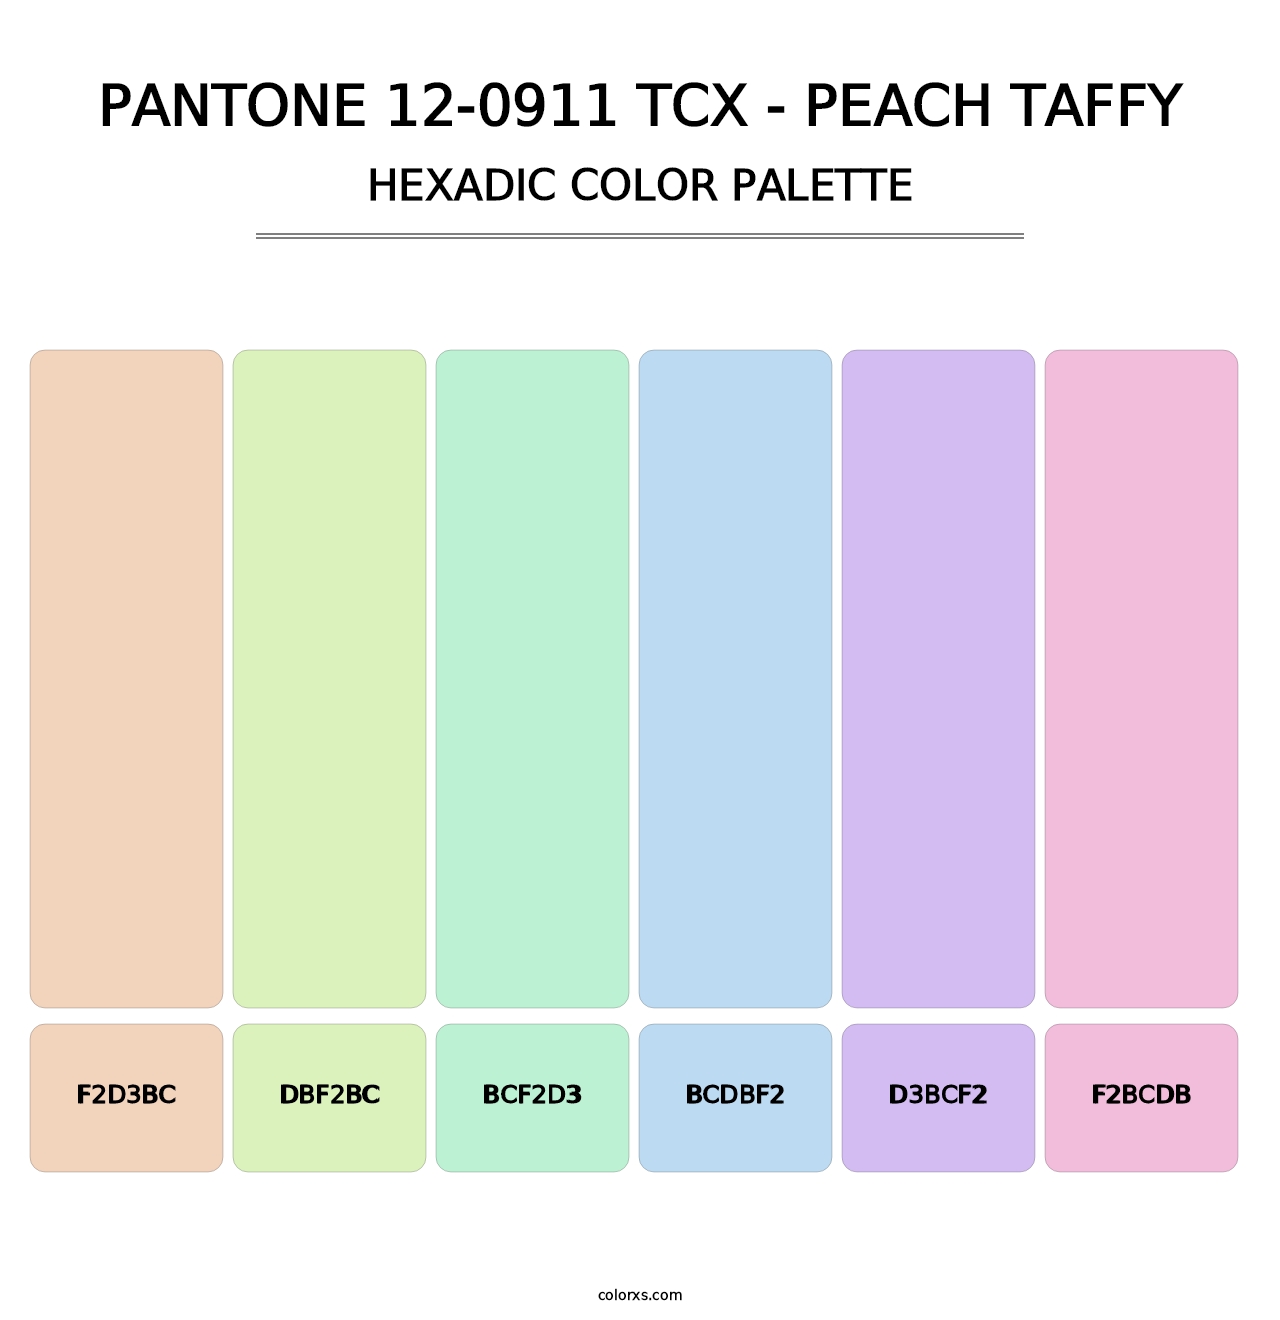 PANTONE 12-0911 TCX - Peach Taffy - Hexadic Color Palette